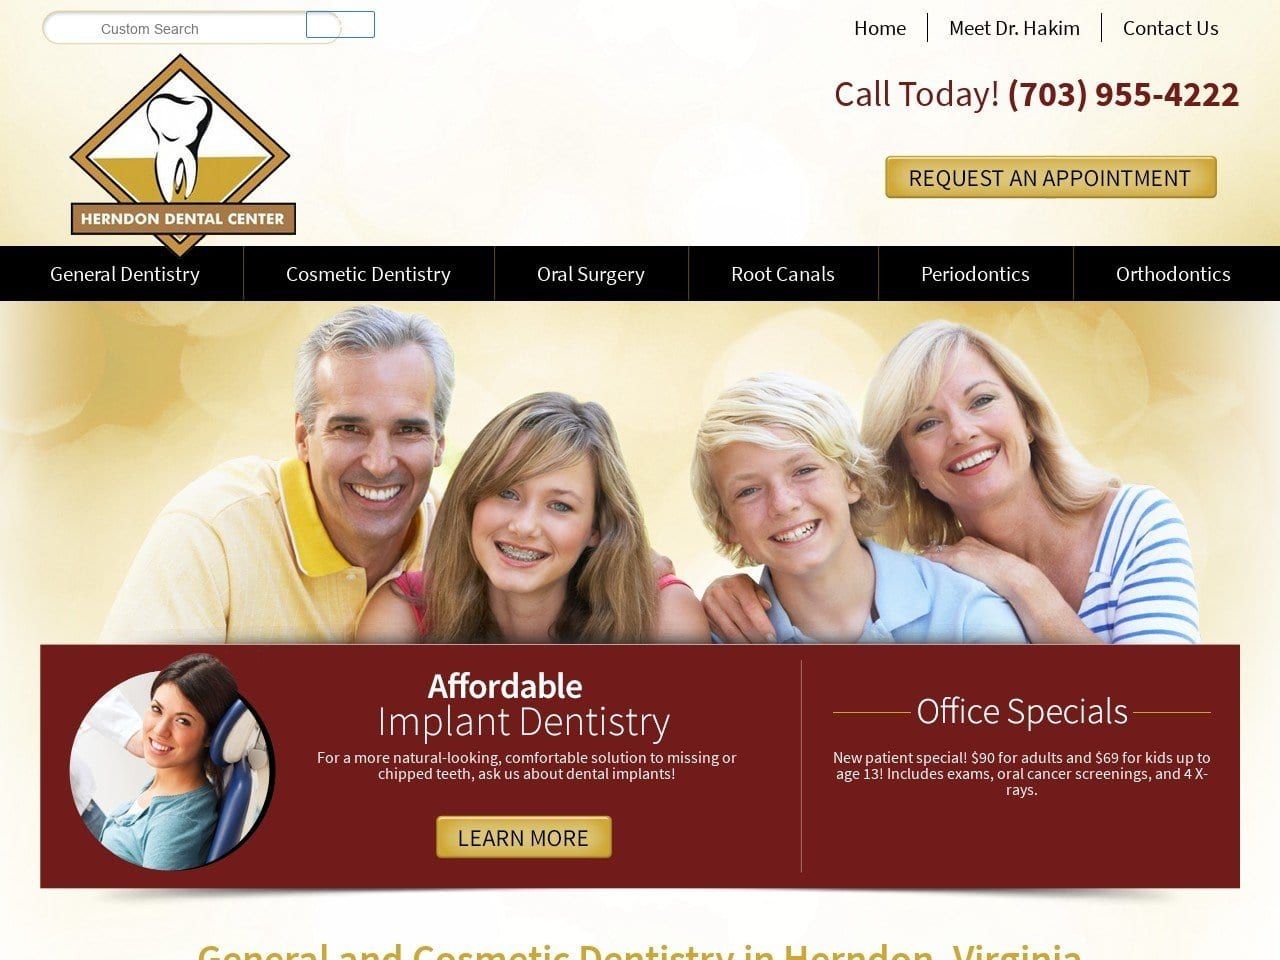 Herndon Dental Center Website Screenshot from herndondentalcenter.com